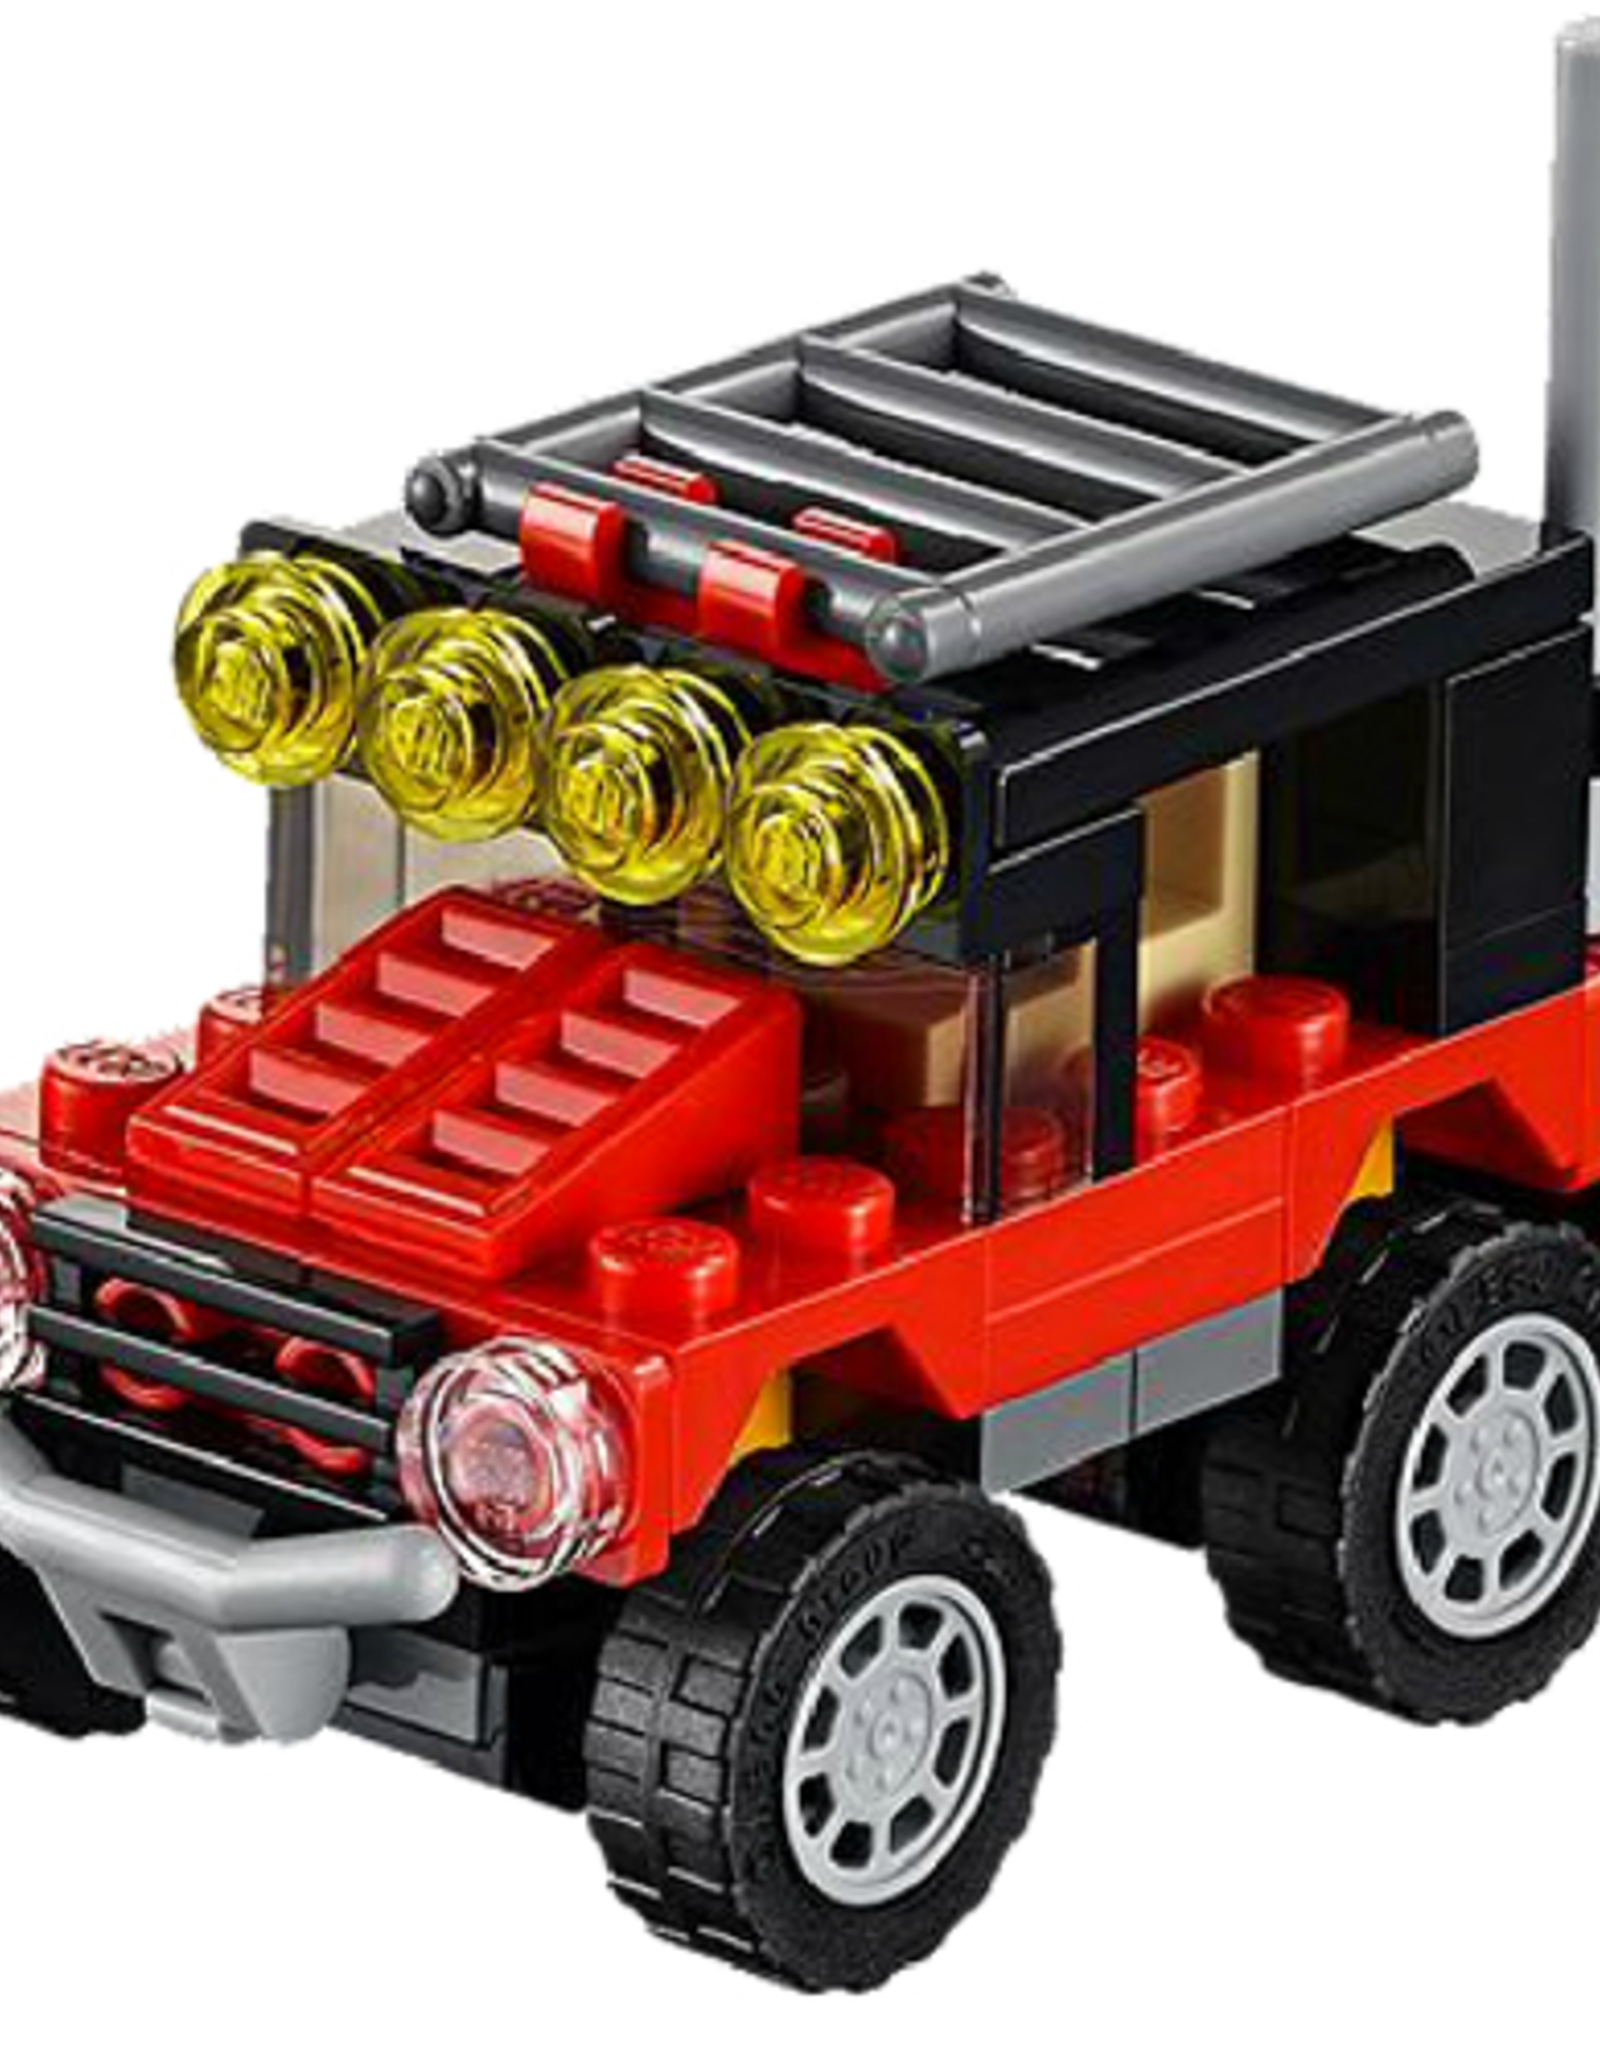 LEGO LEGO 31040 Desert Racers CREATOR